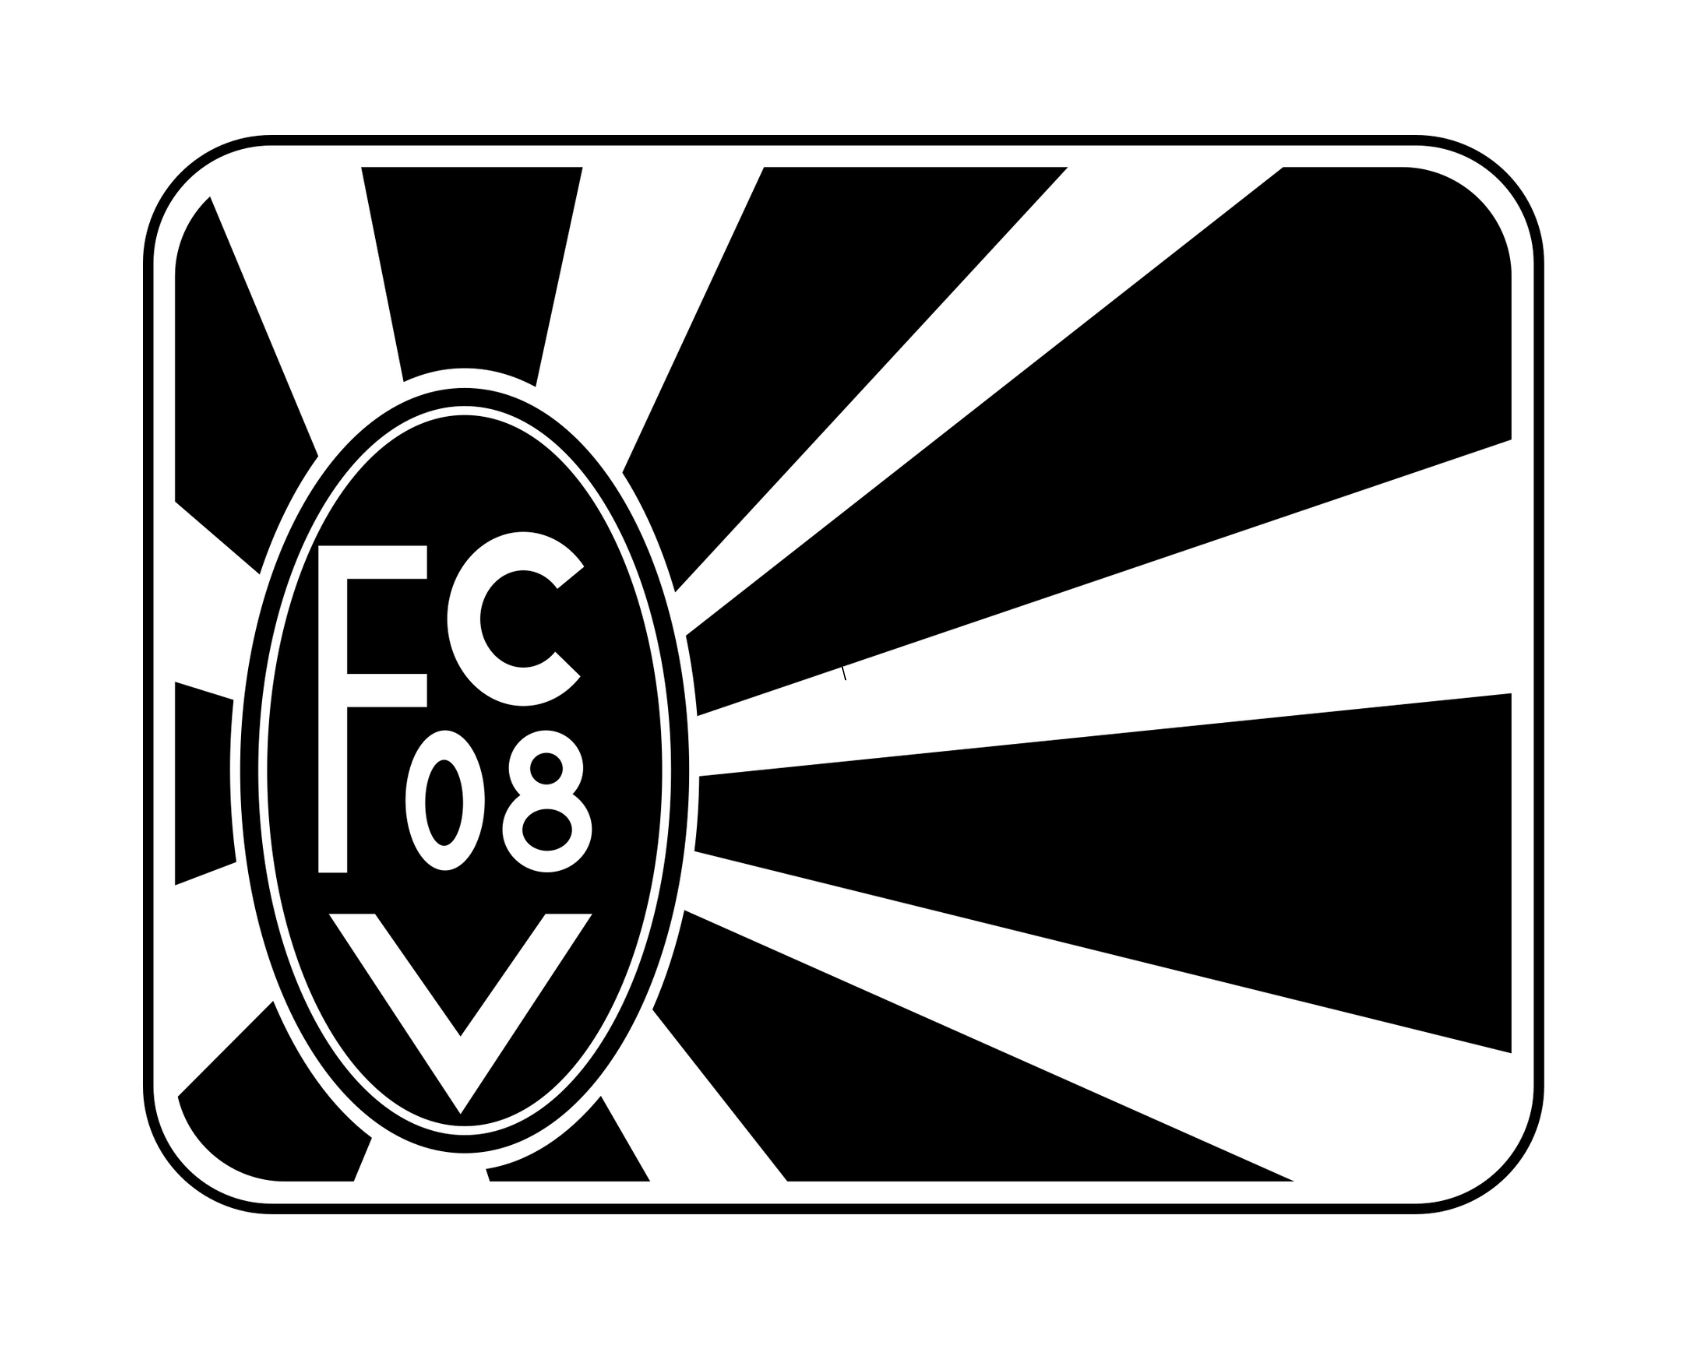 fc-08-villingen-17-football-club-facts